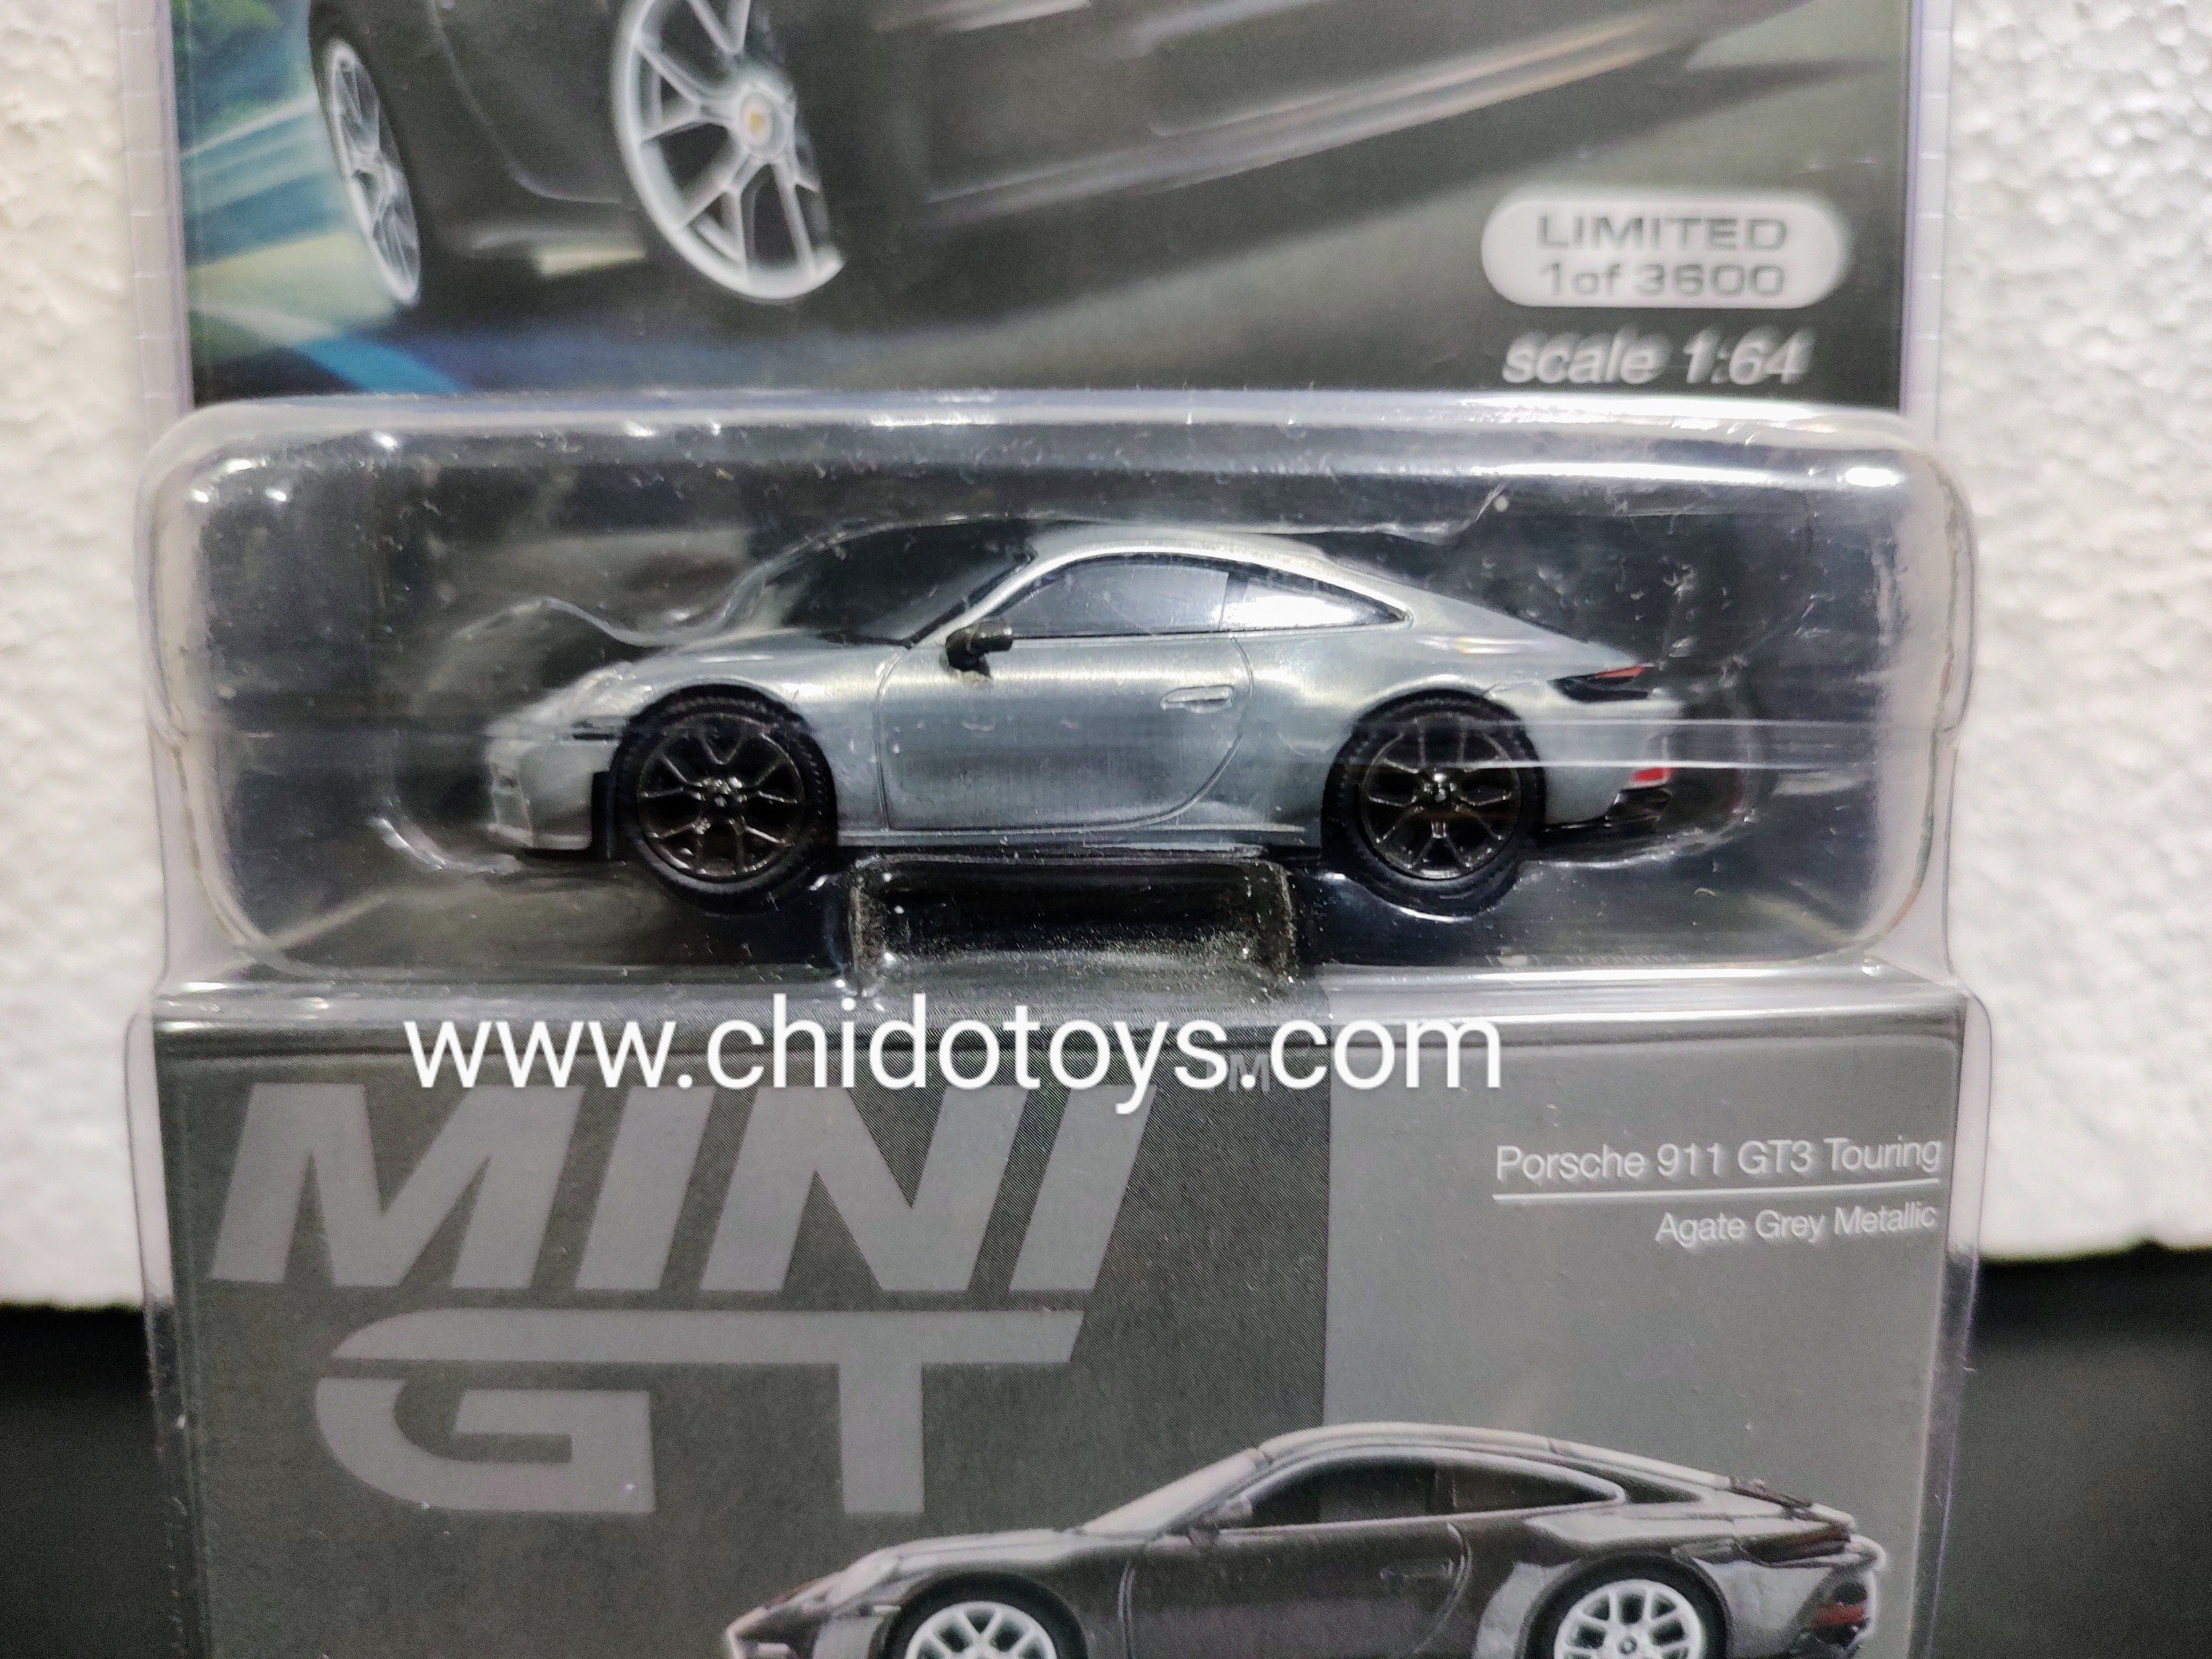 Chase Porsche 911 GT3 Touring, Mini GT - Chido Toys